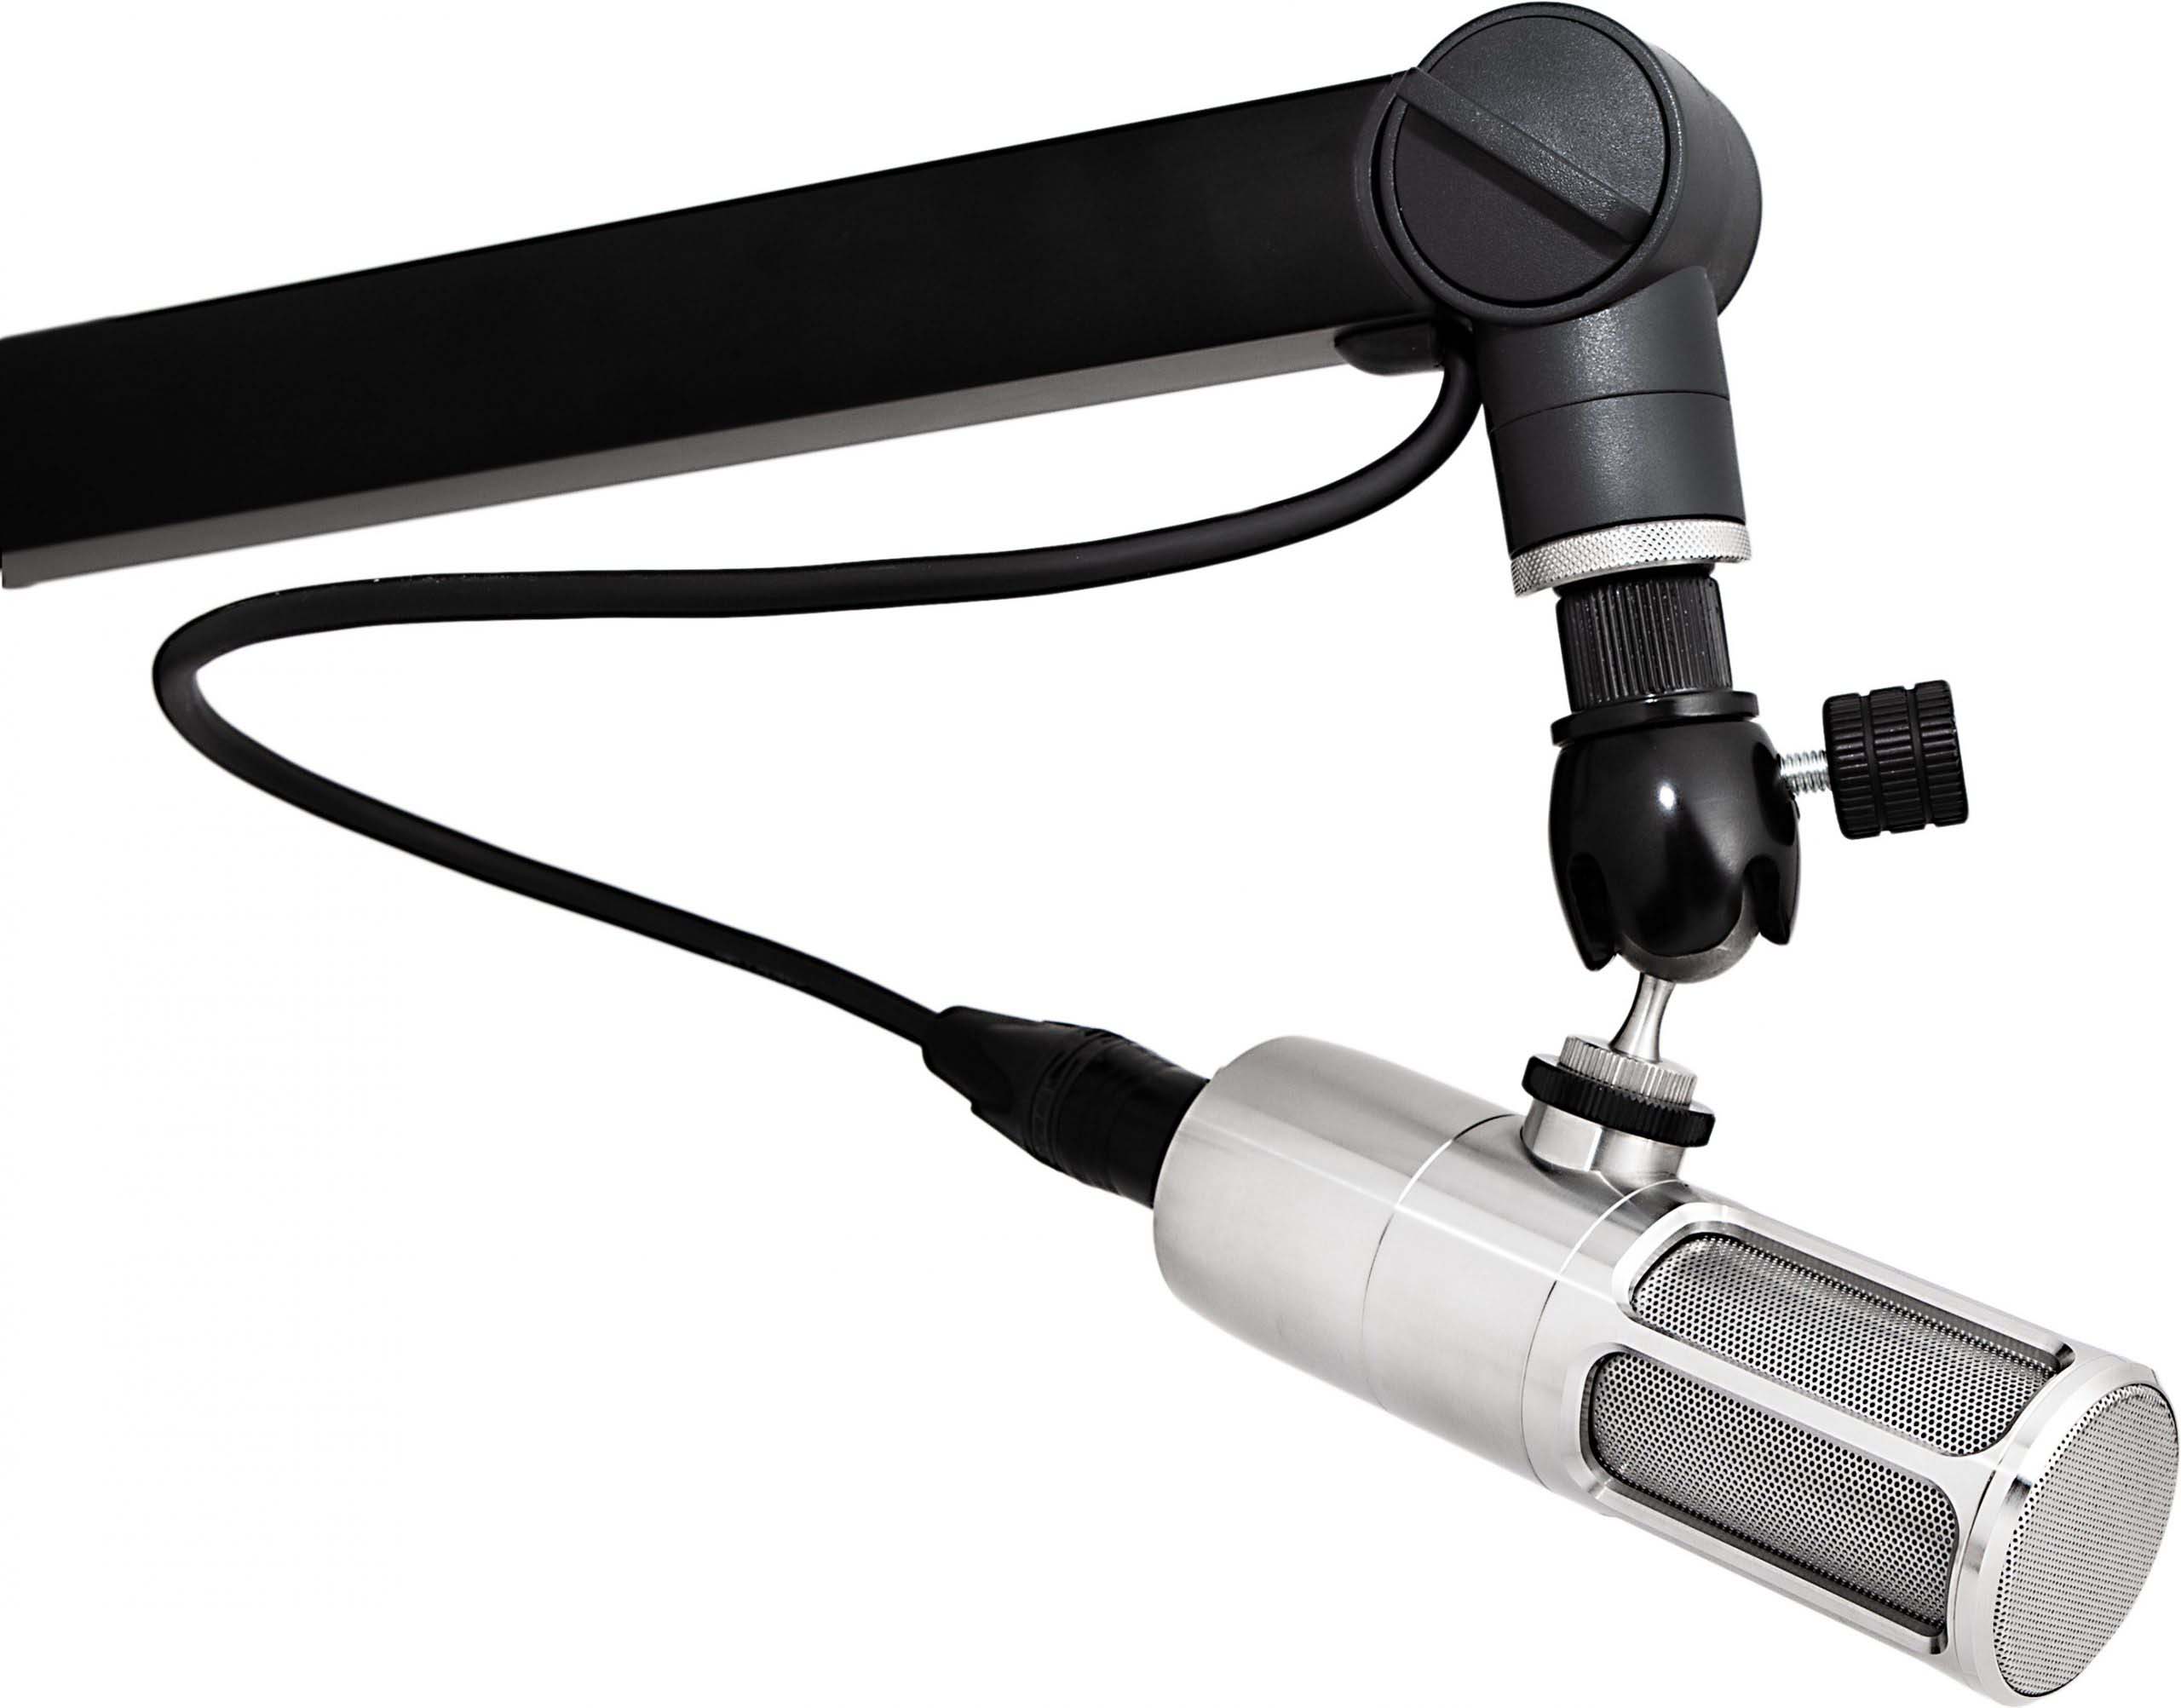 Earthworks ICON Studio-Quality USB Streaming Microphone